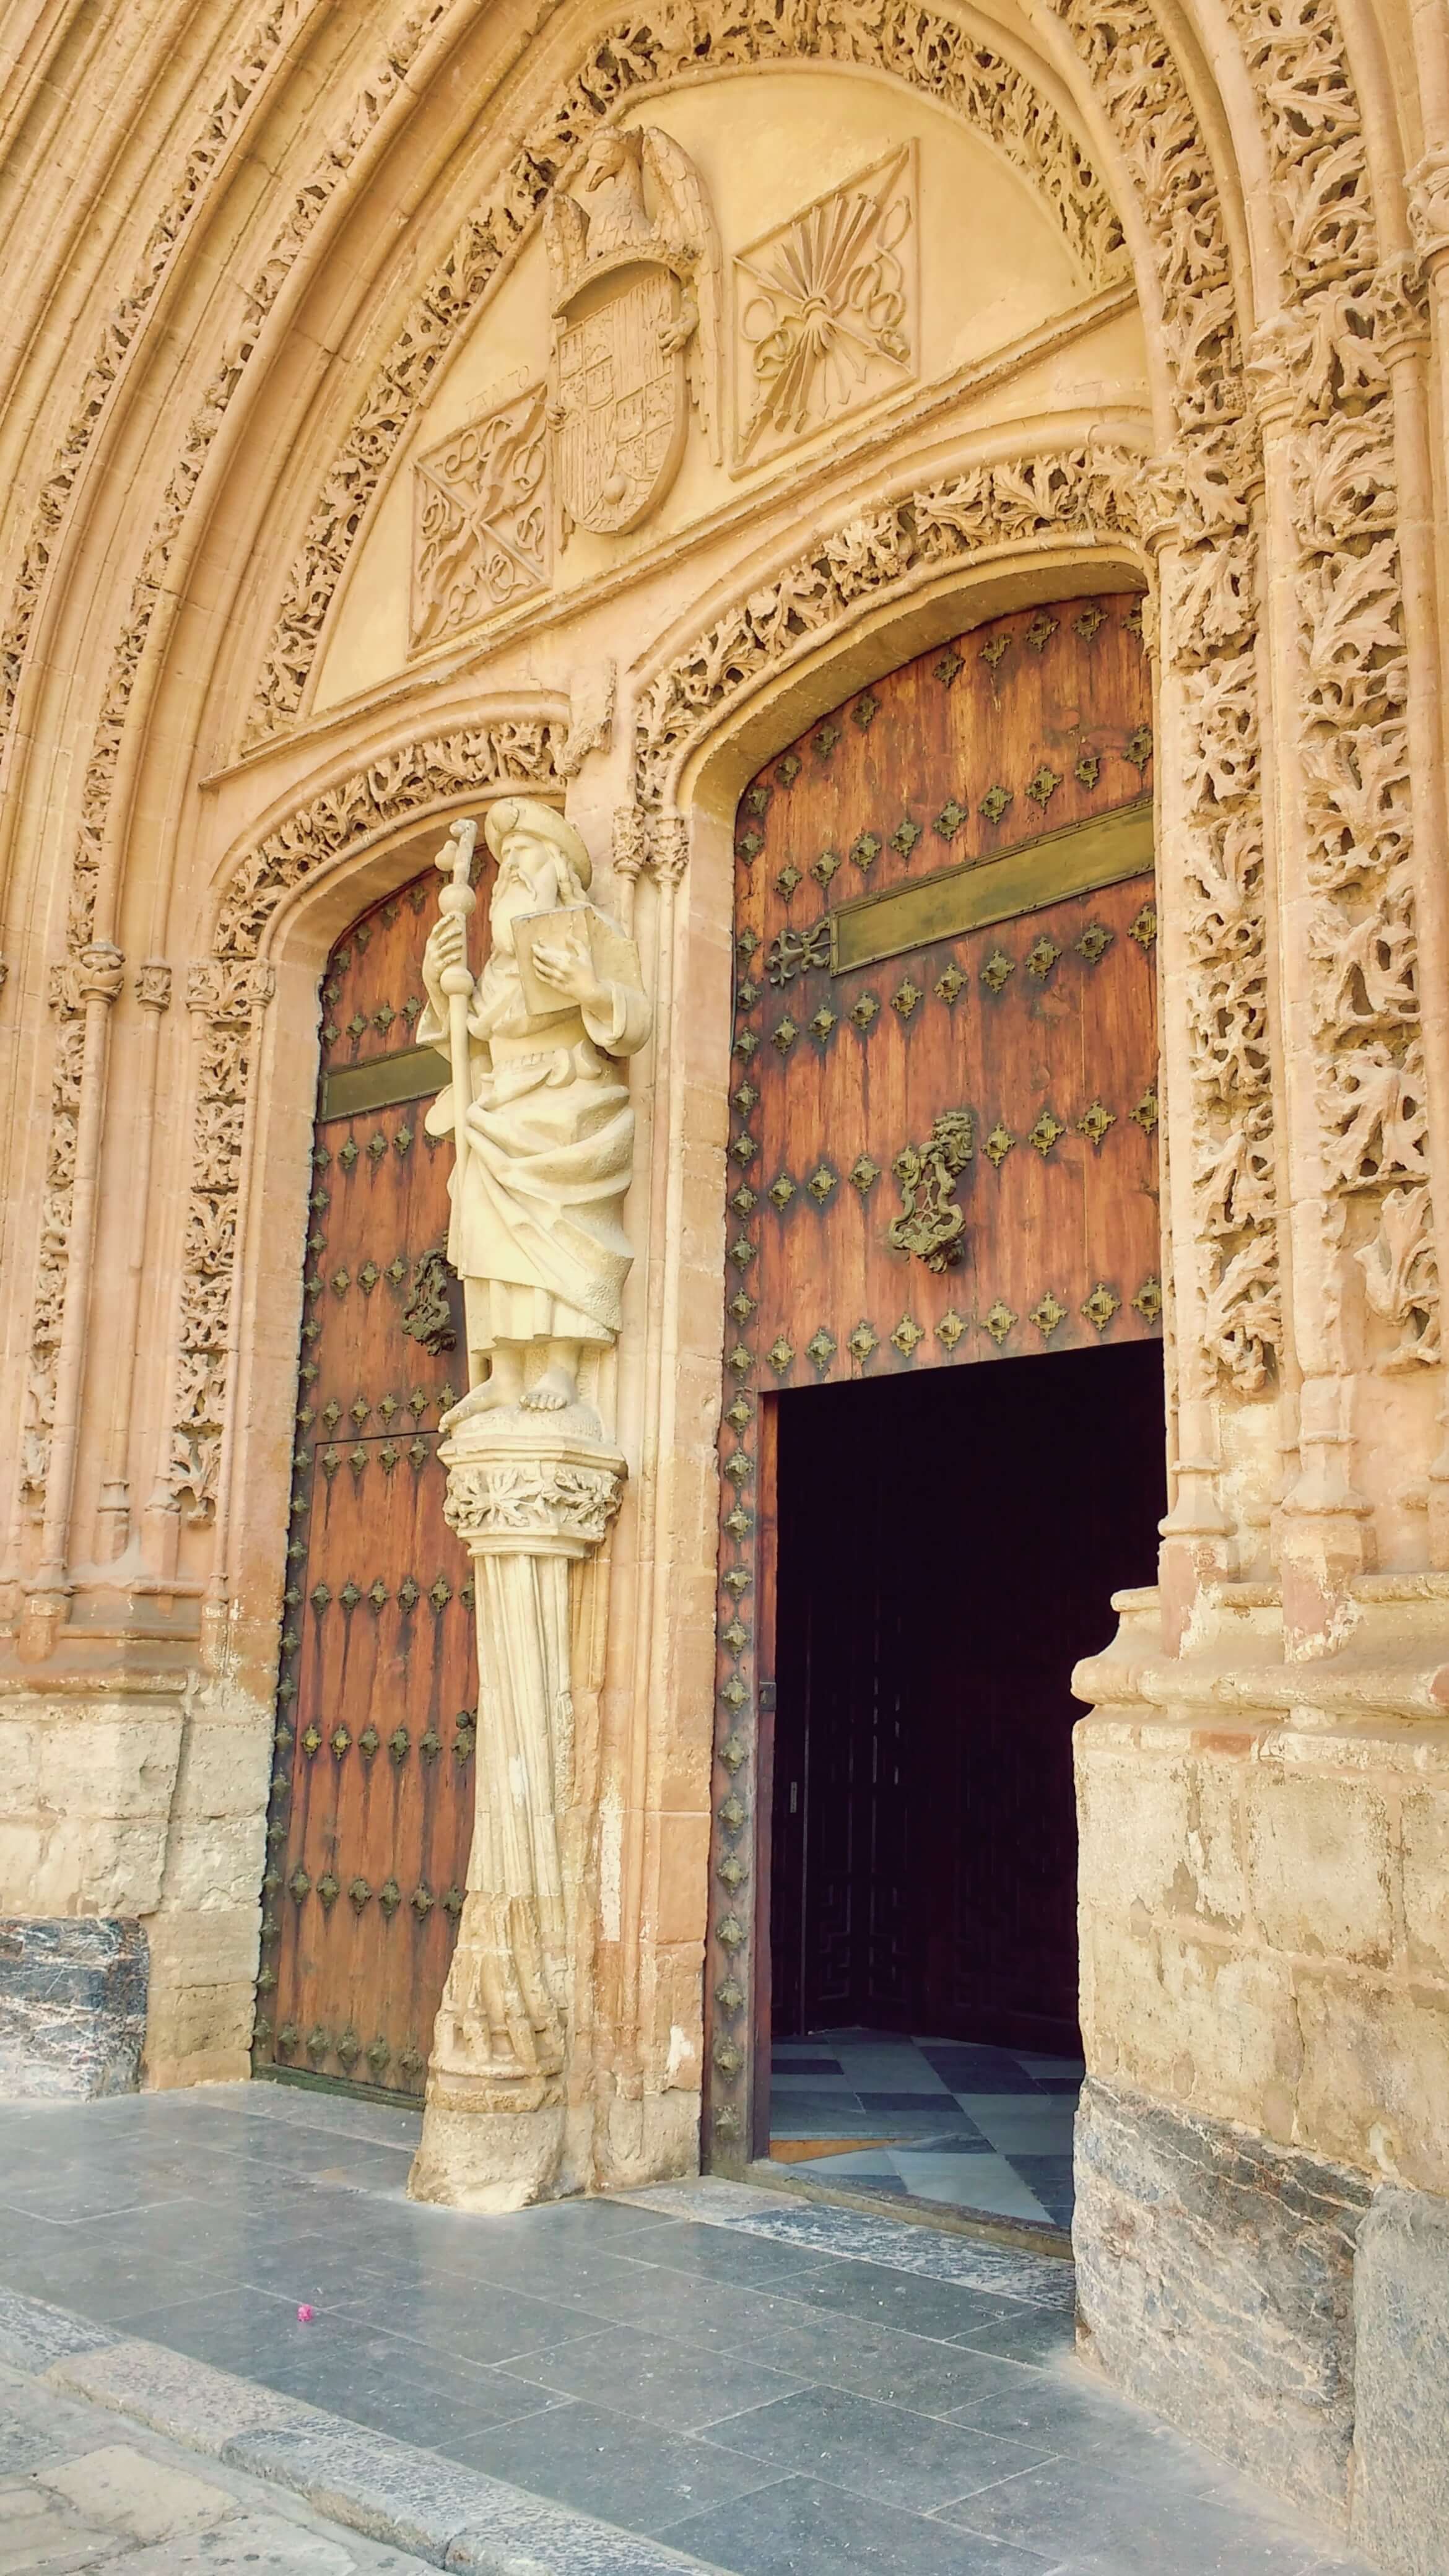 The open wooden doorway of a gothic building